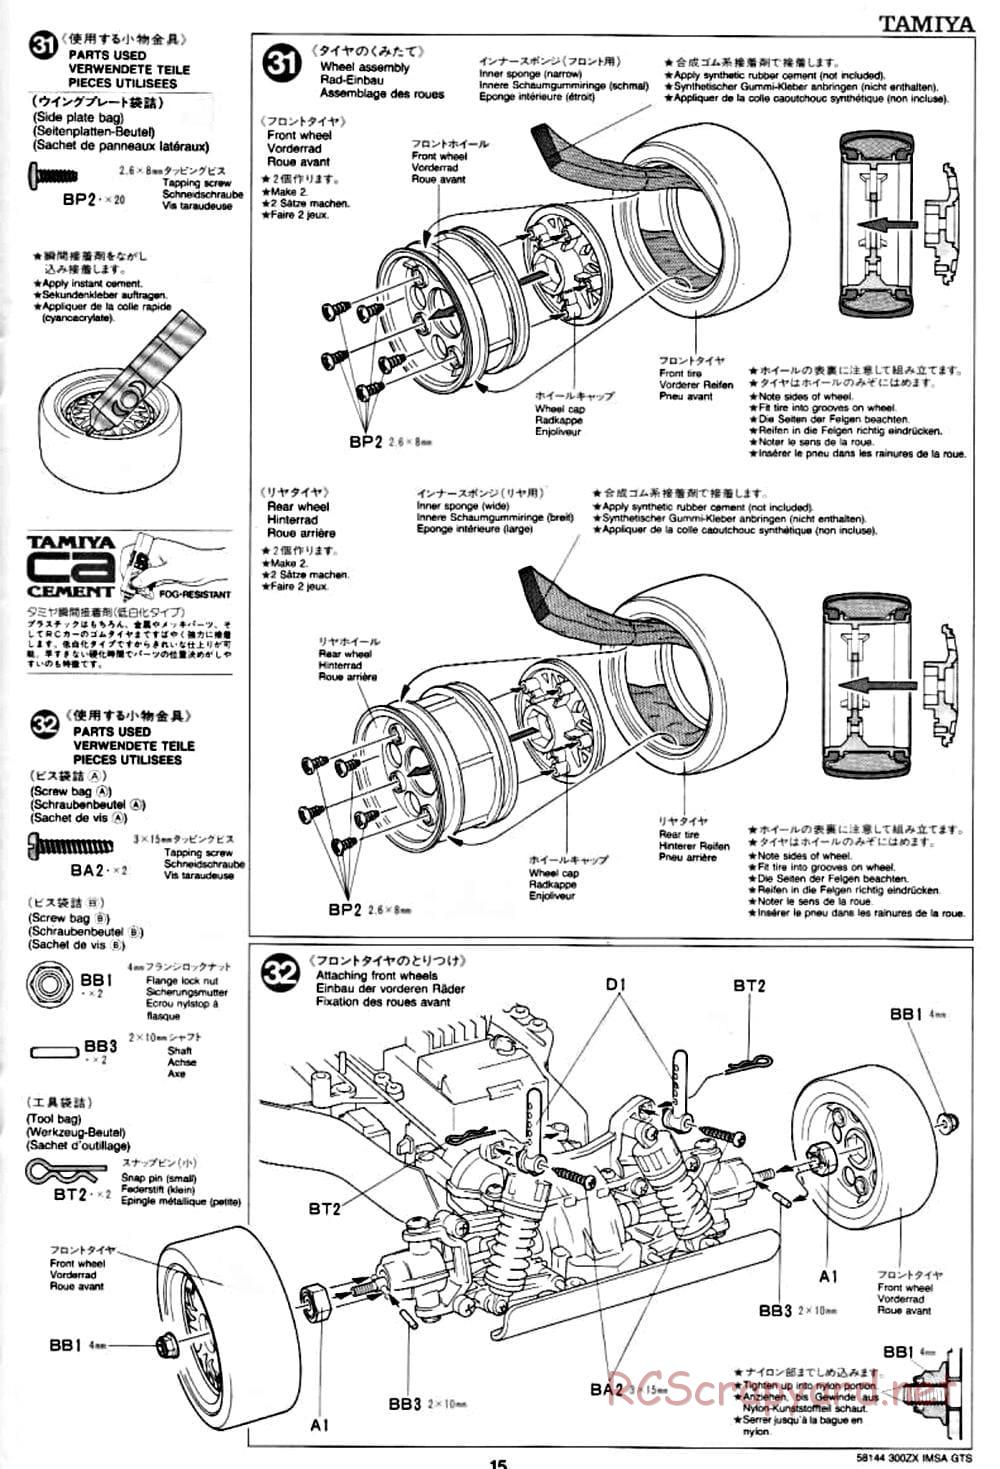 Tamiya - Nissan 300ZX IMSA-GTS - TA-02W Chassis - Manual - Page 15